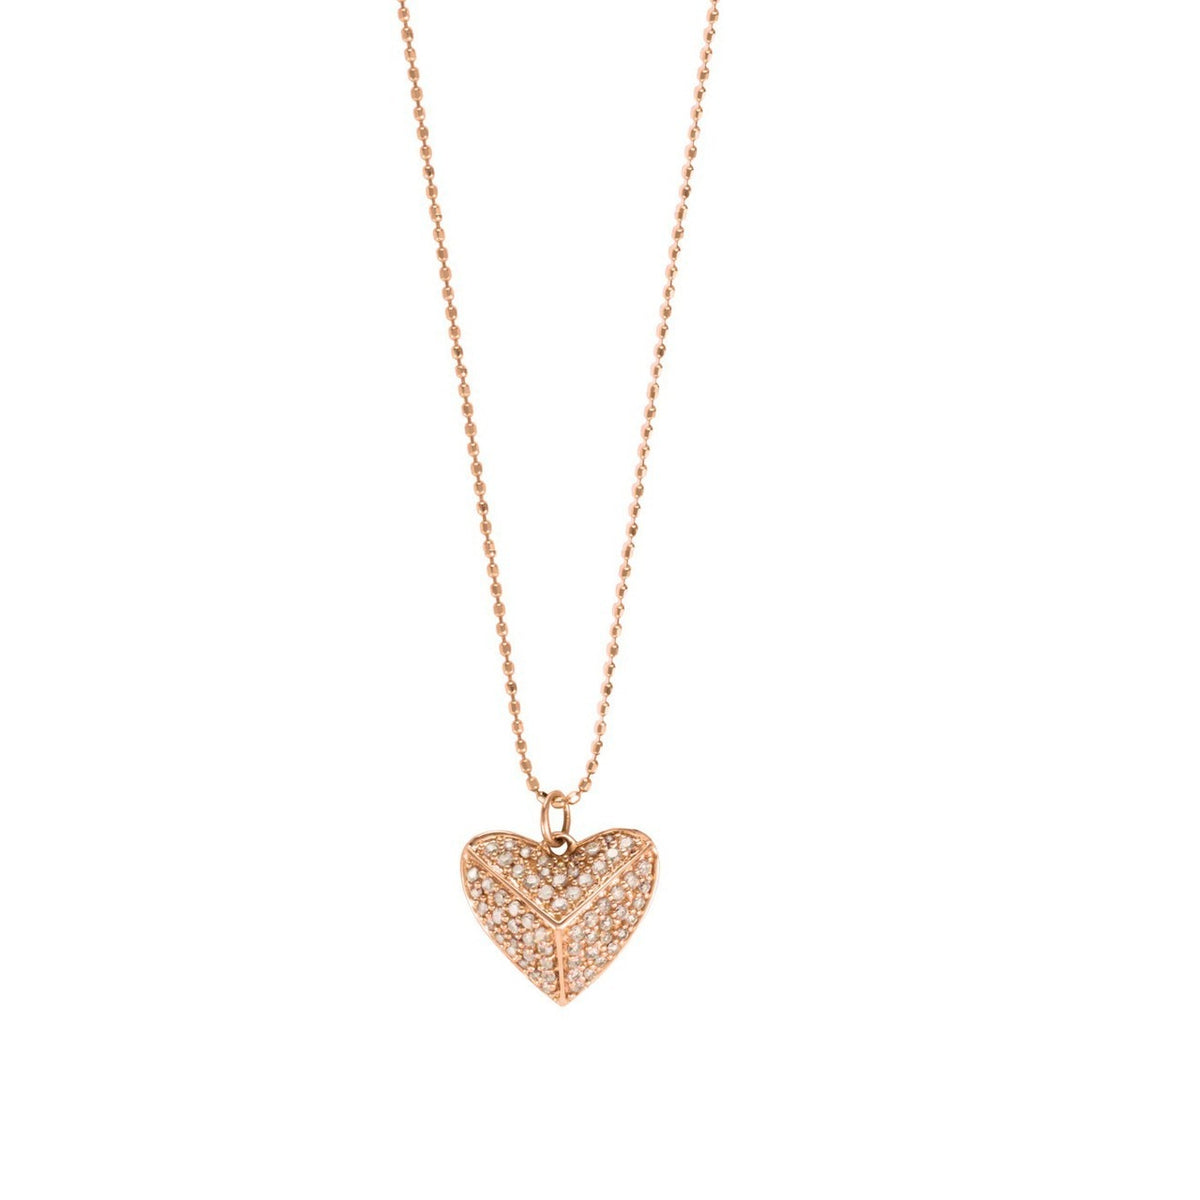 Medium Rose Gold and Diamond Pyramid Heart Necklace - Thomas Laine Jewelry